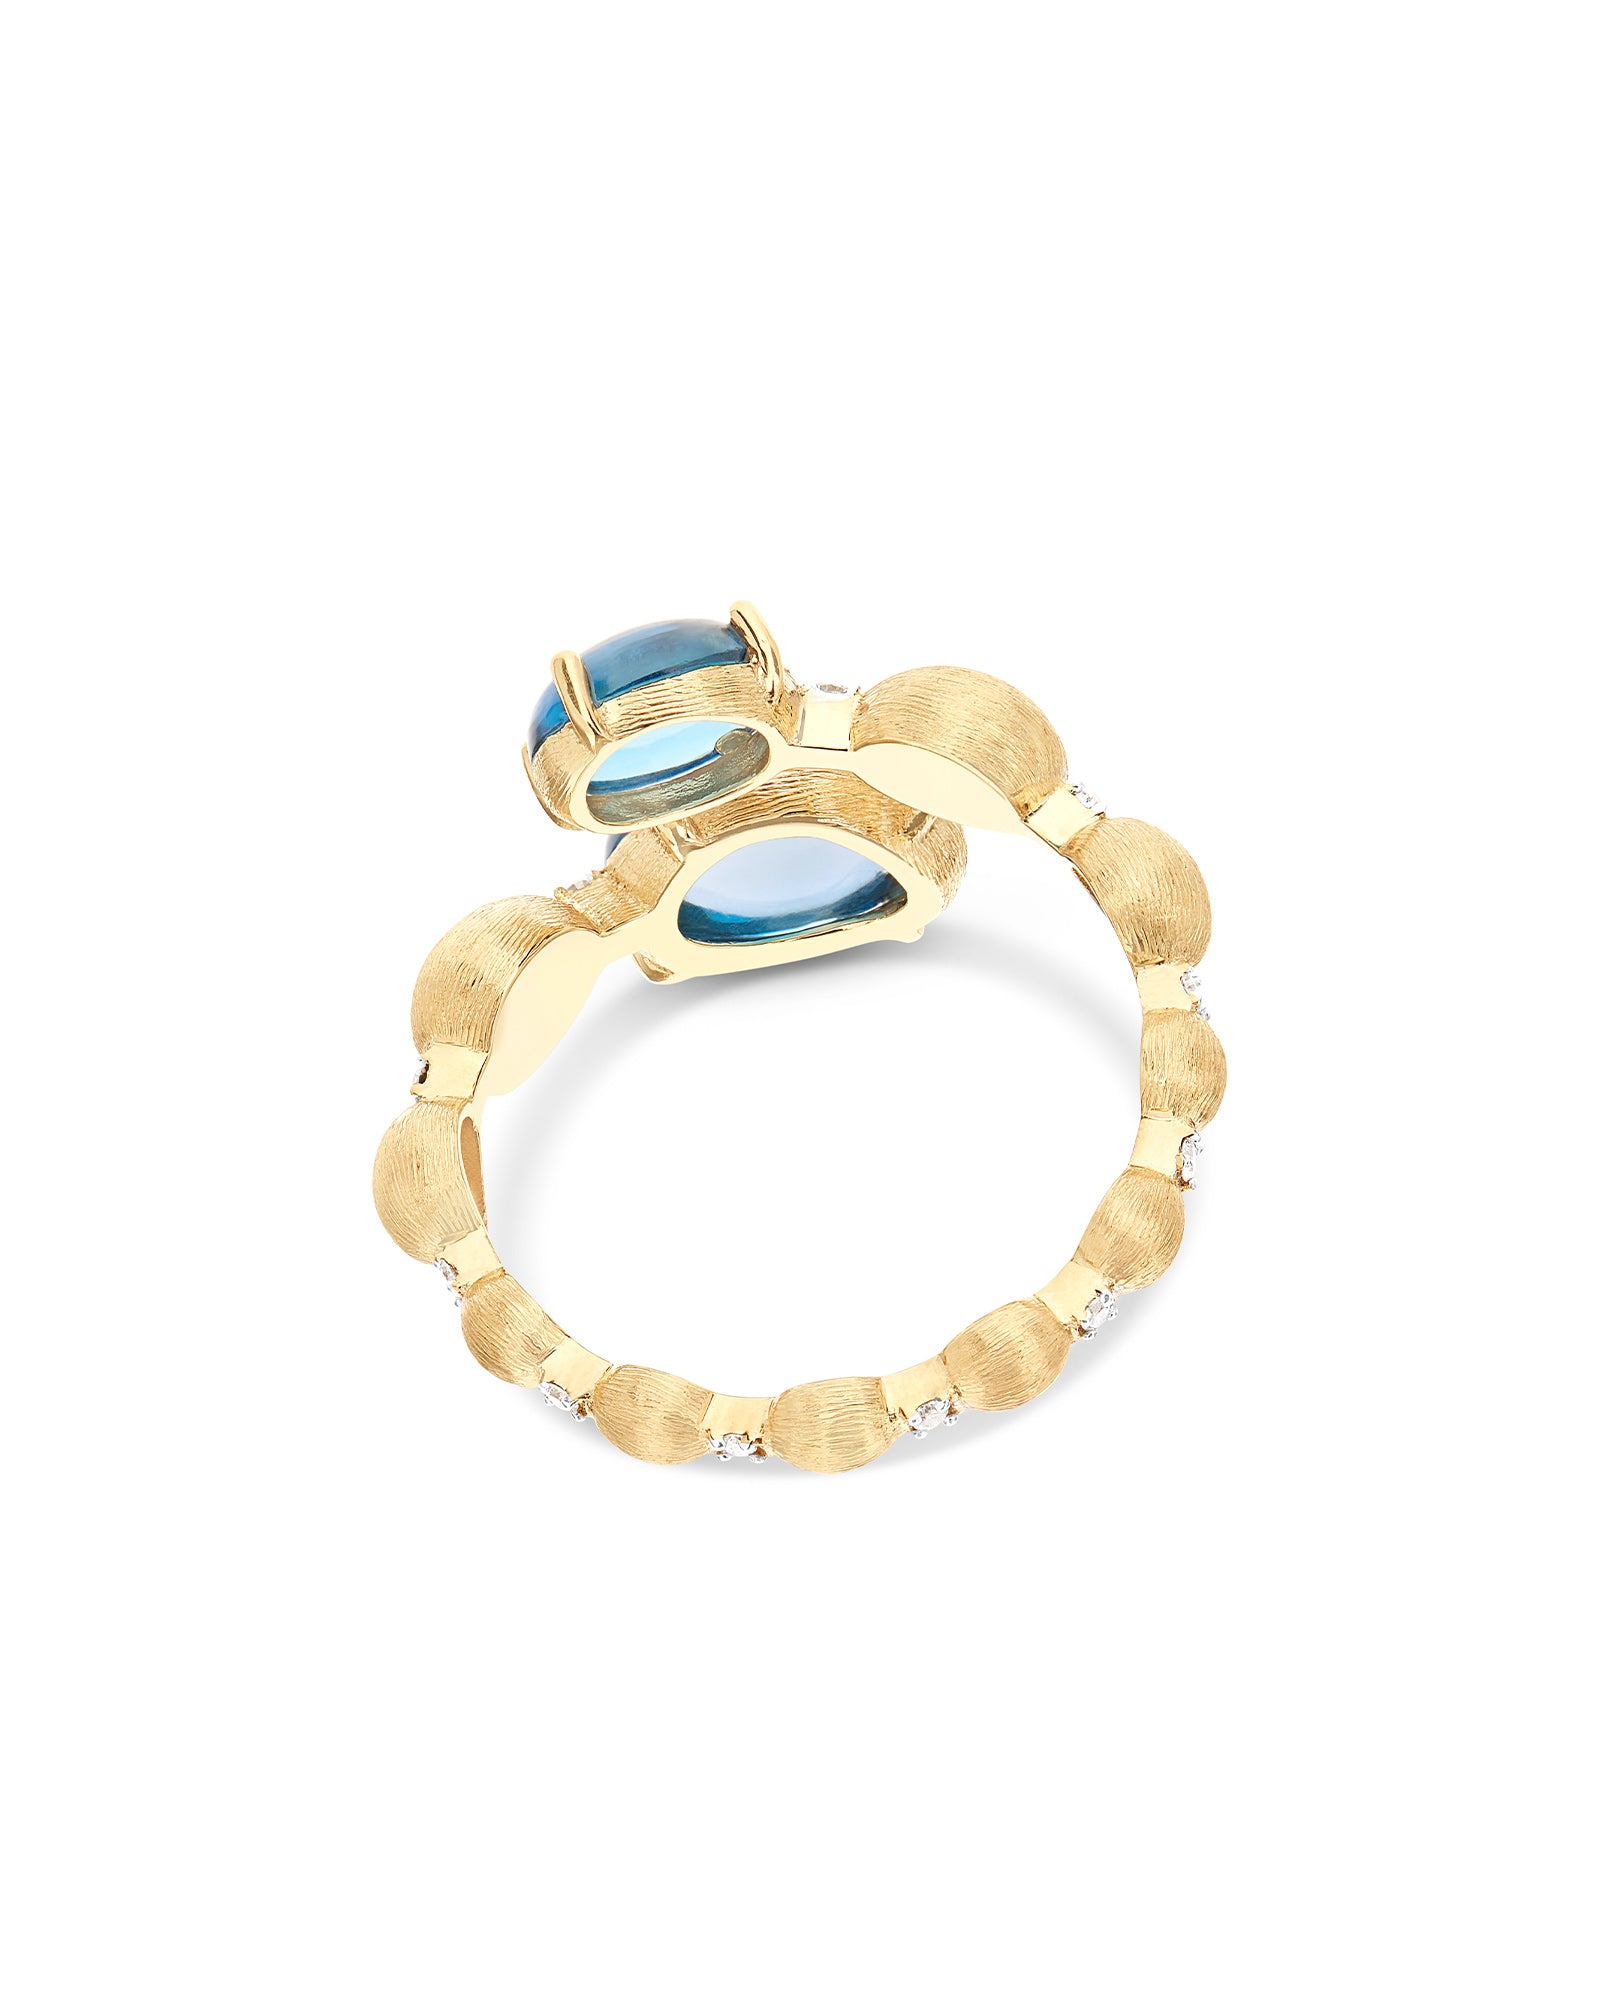 "Azure" Gold, diamonds and London Blue Topaz open ring